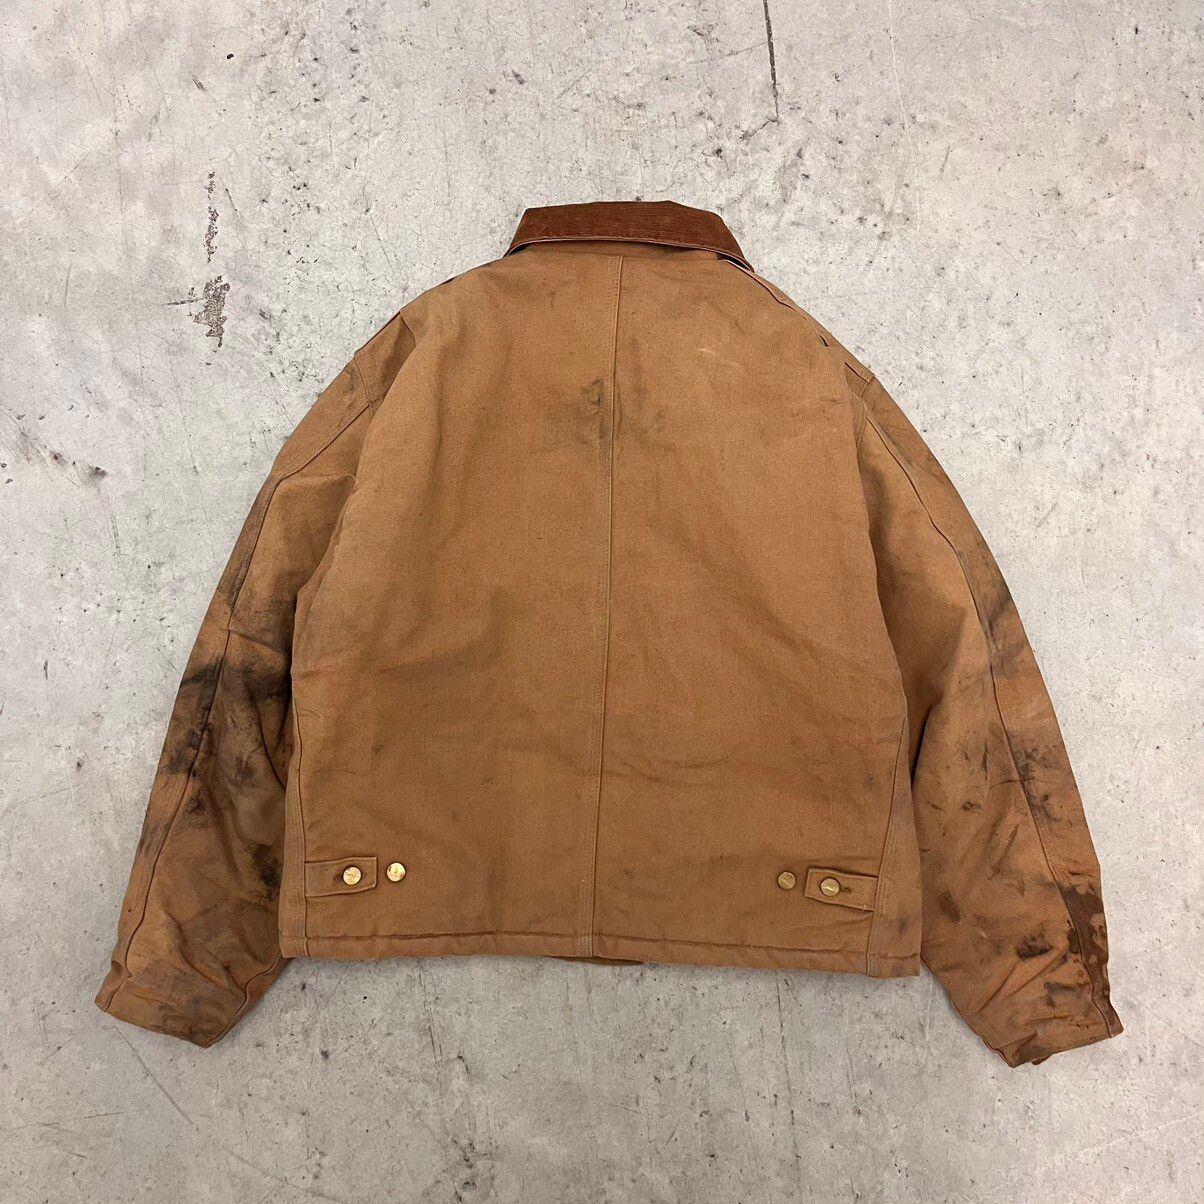 Vintage Brown Vintage Carhartt Jacket Size US S / EU 44-46 / 1 - 2 Preview